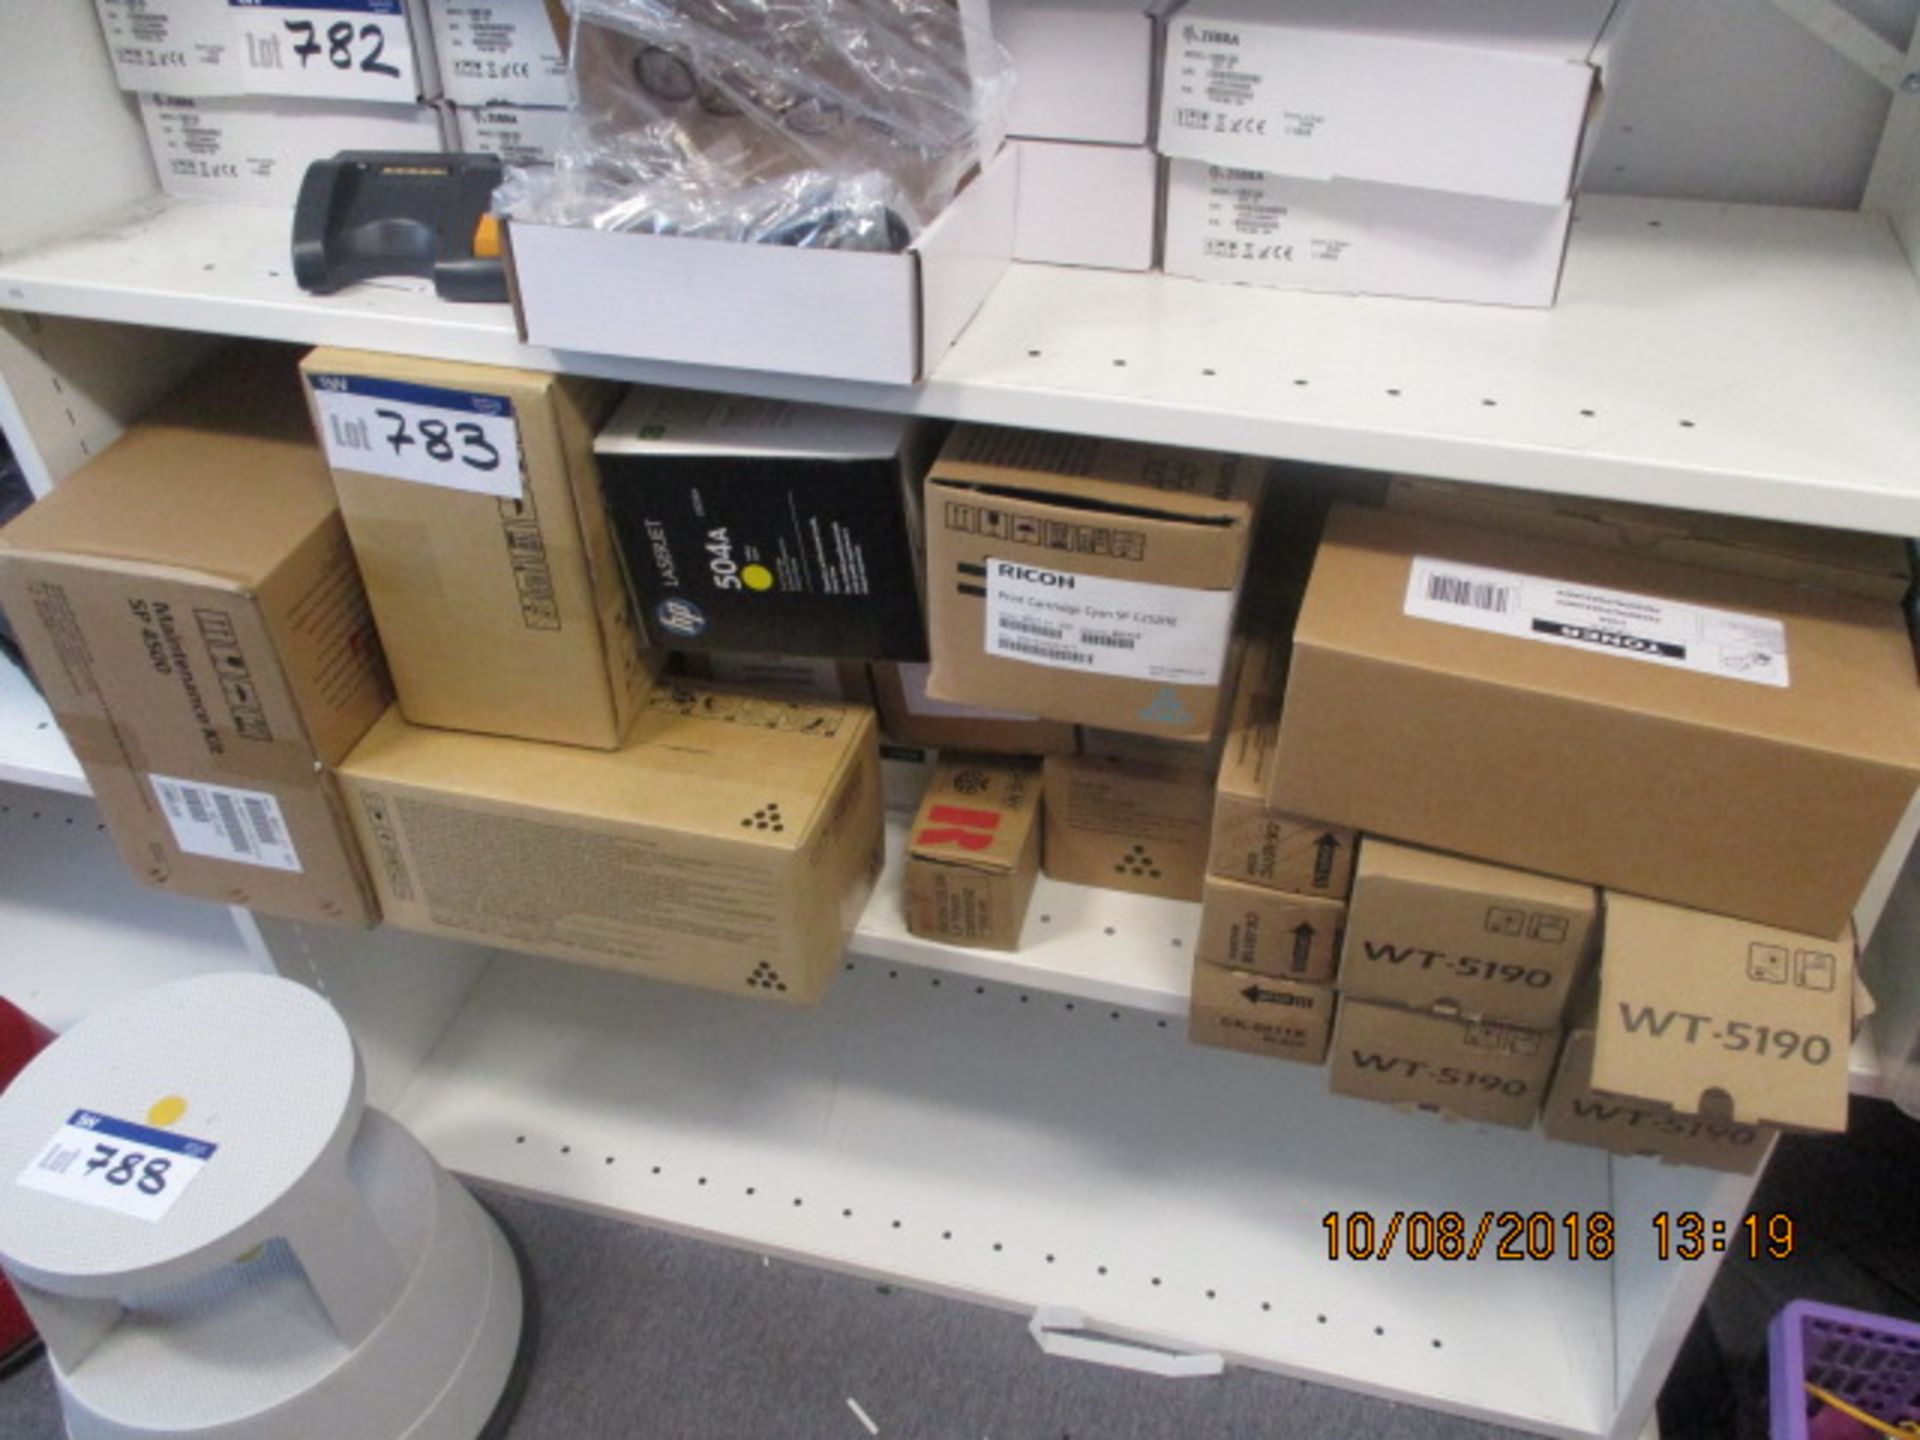 Quantity of Toner Cartridges, as set out on shelf